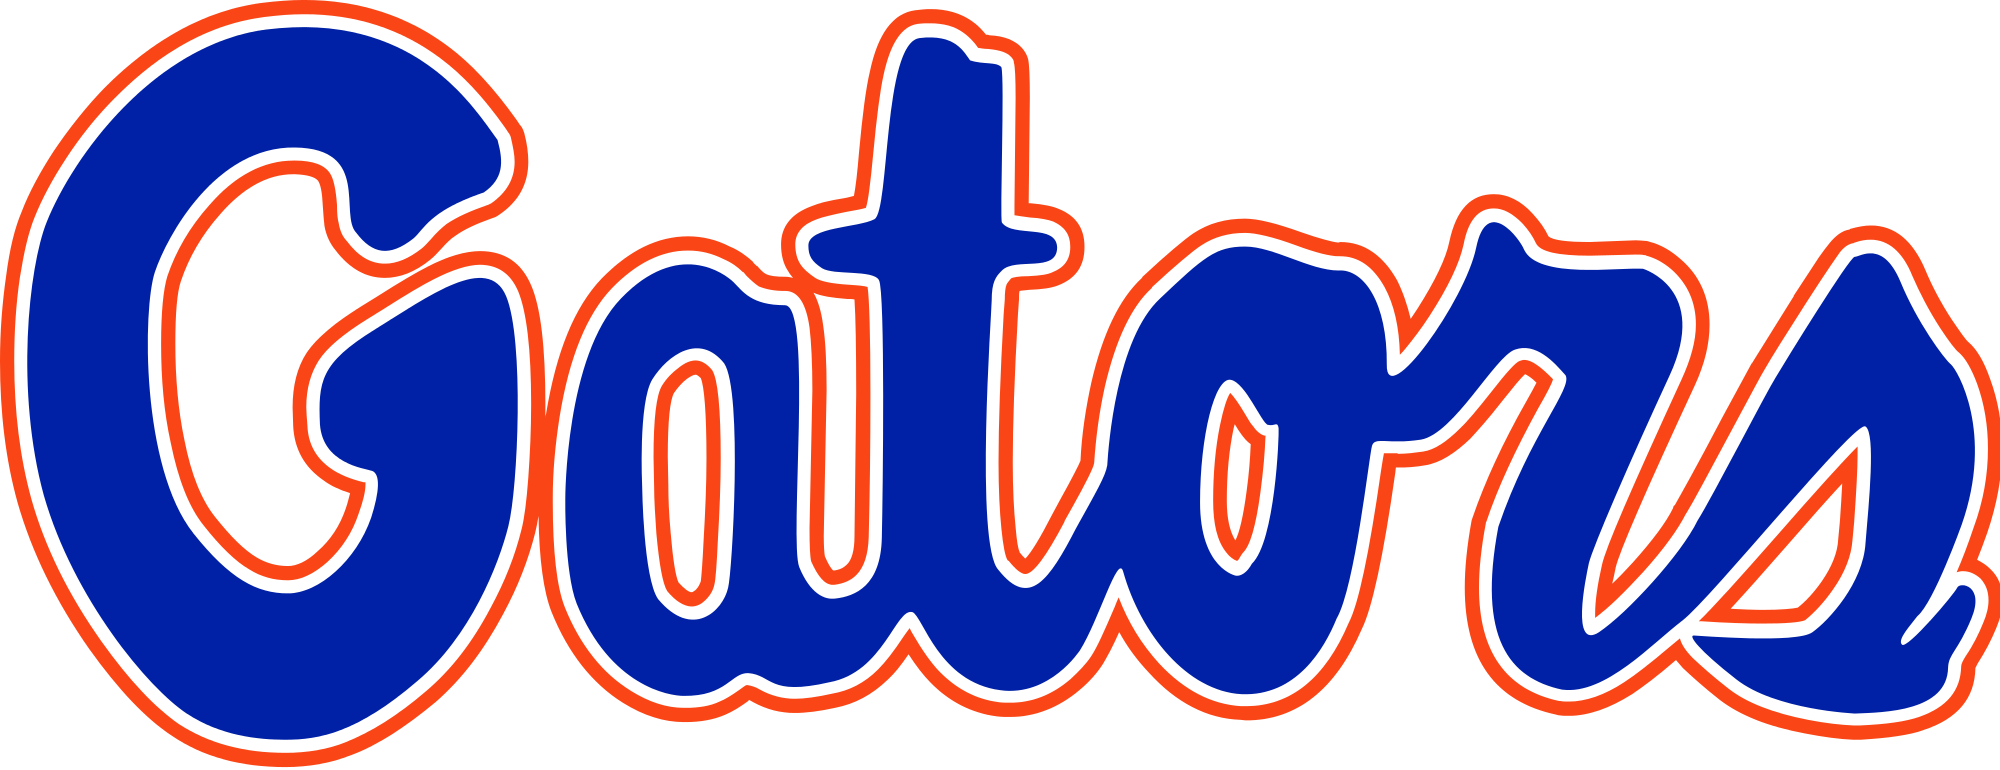 Florida Gators Logo PNG HD